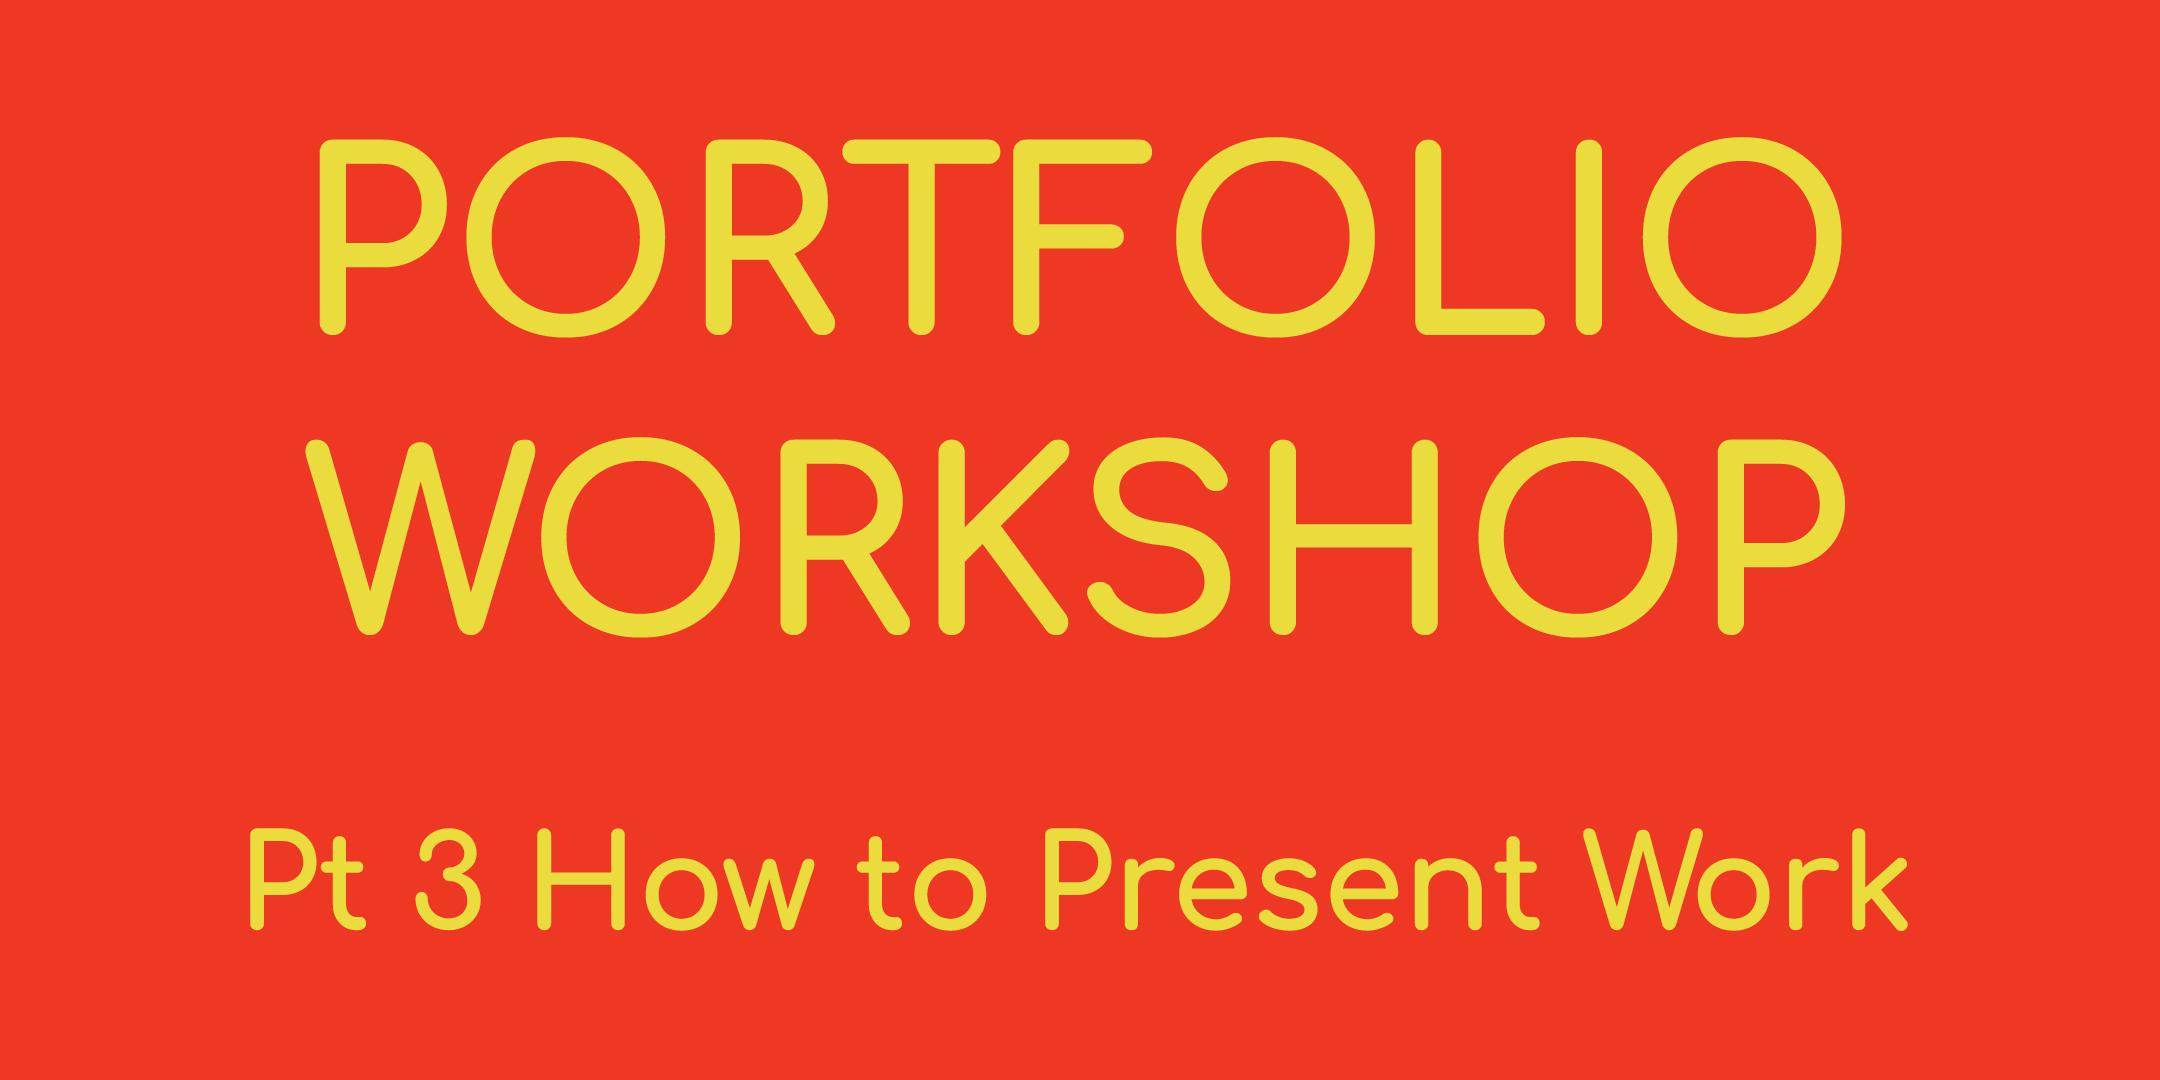 Workshop Series: Design Portfolios - Pt. 3 How to Present Your Work